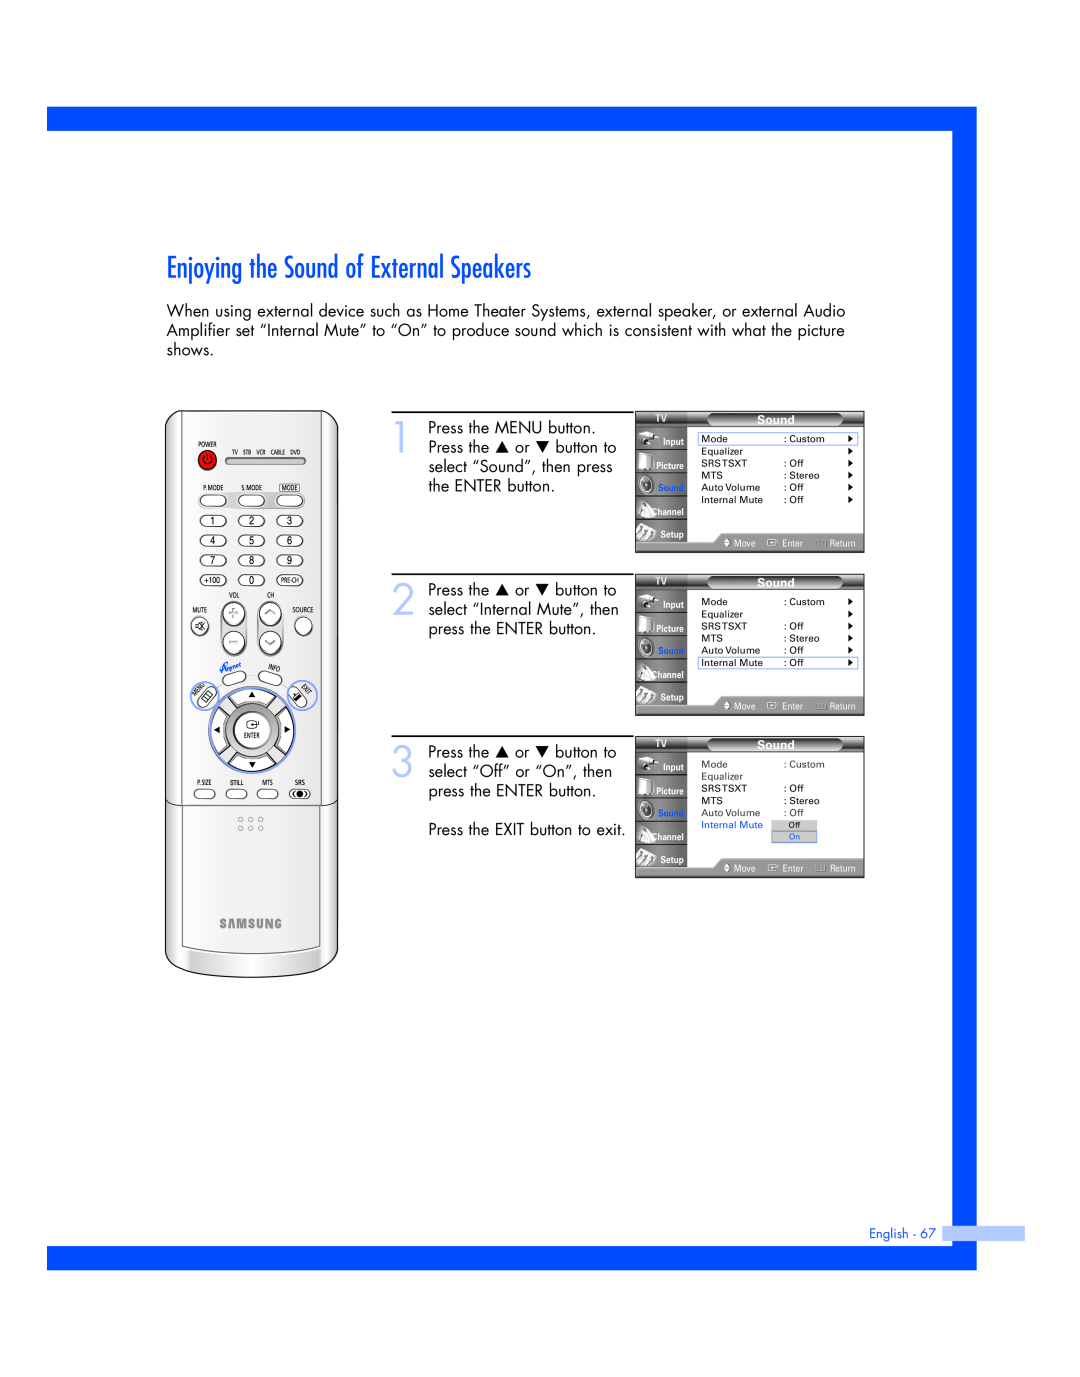 Samsung HL-P4674W instruction manual Enjoying the Sound of External Speakers, Internal Mute 